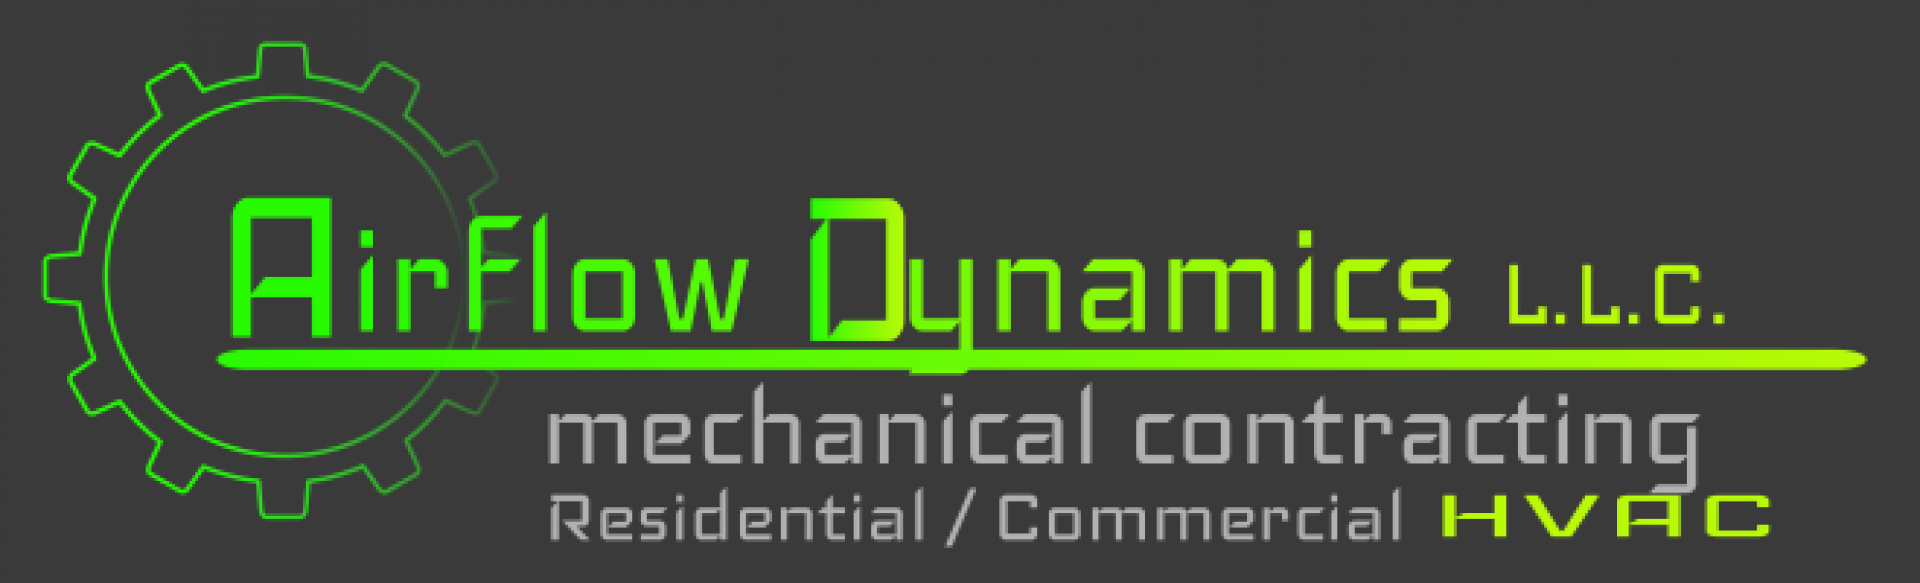 Airflow Dynamics LLC company logo